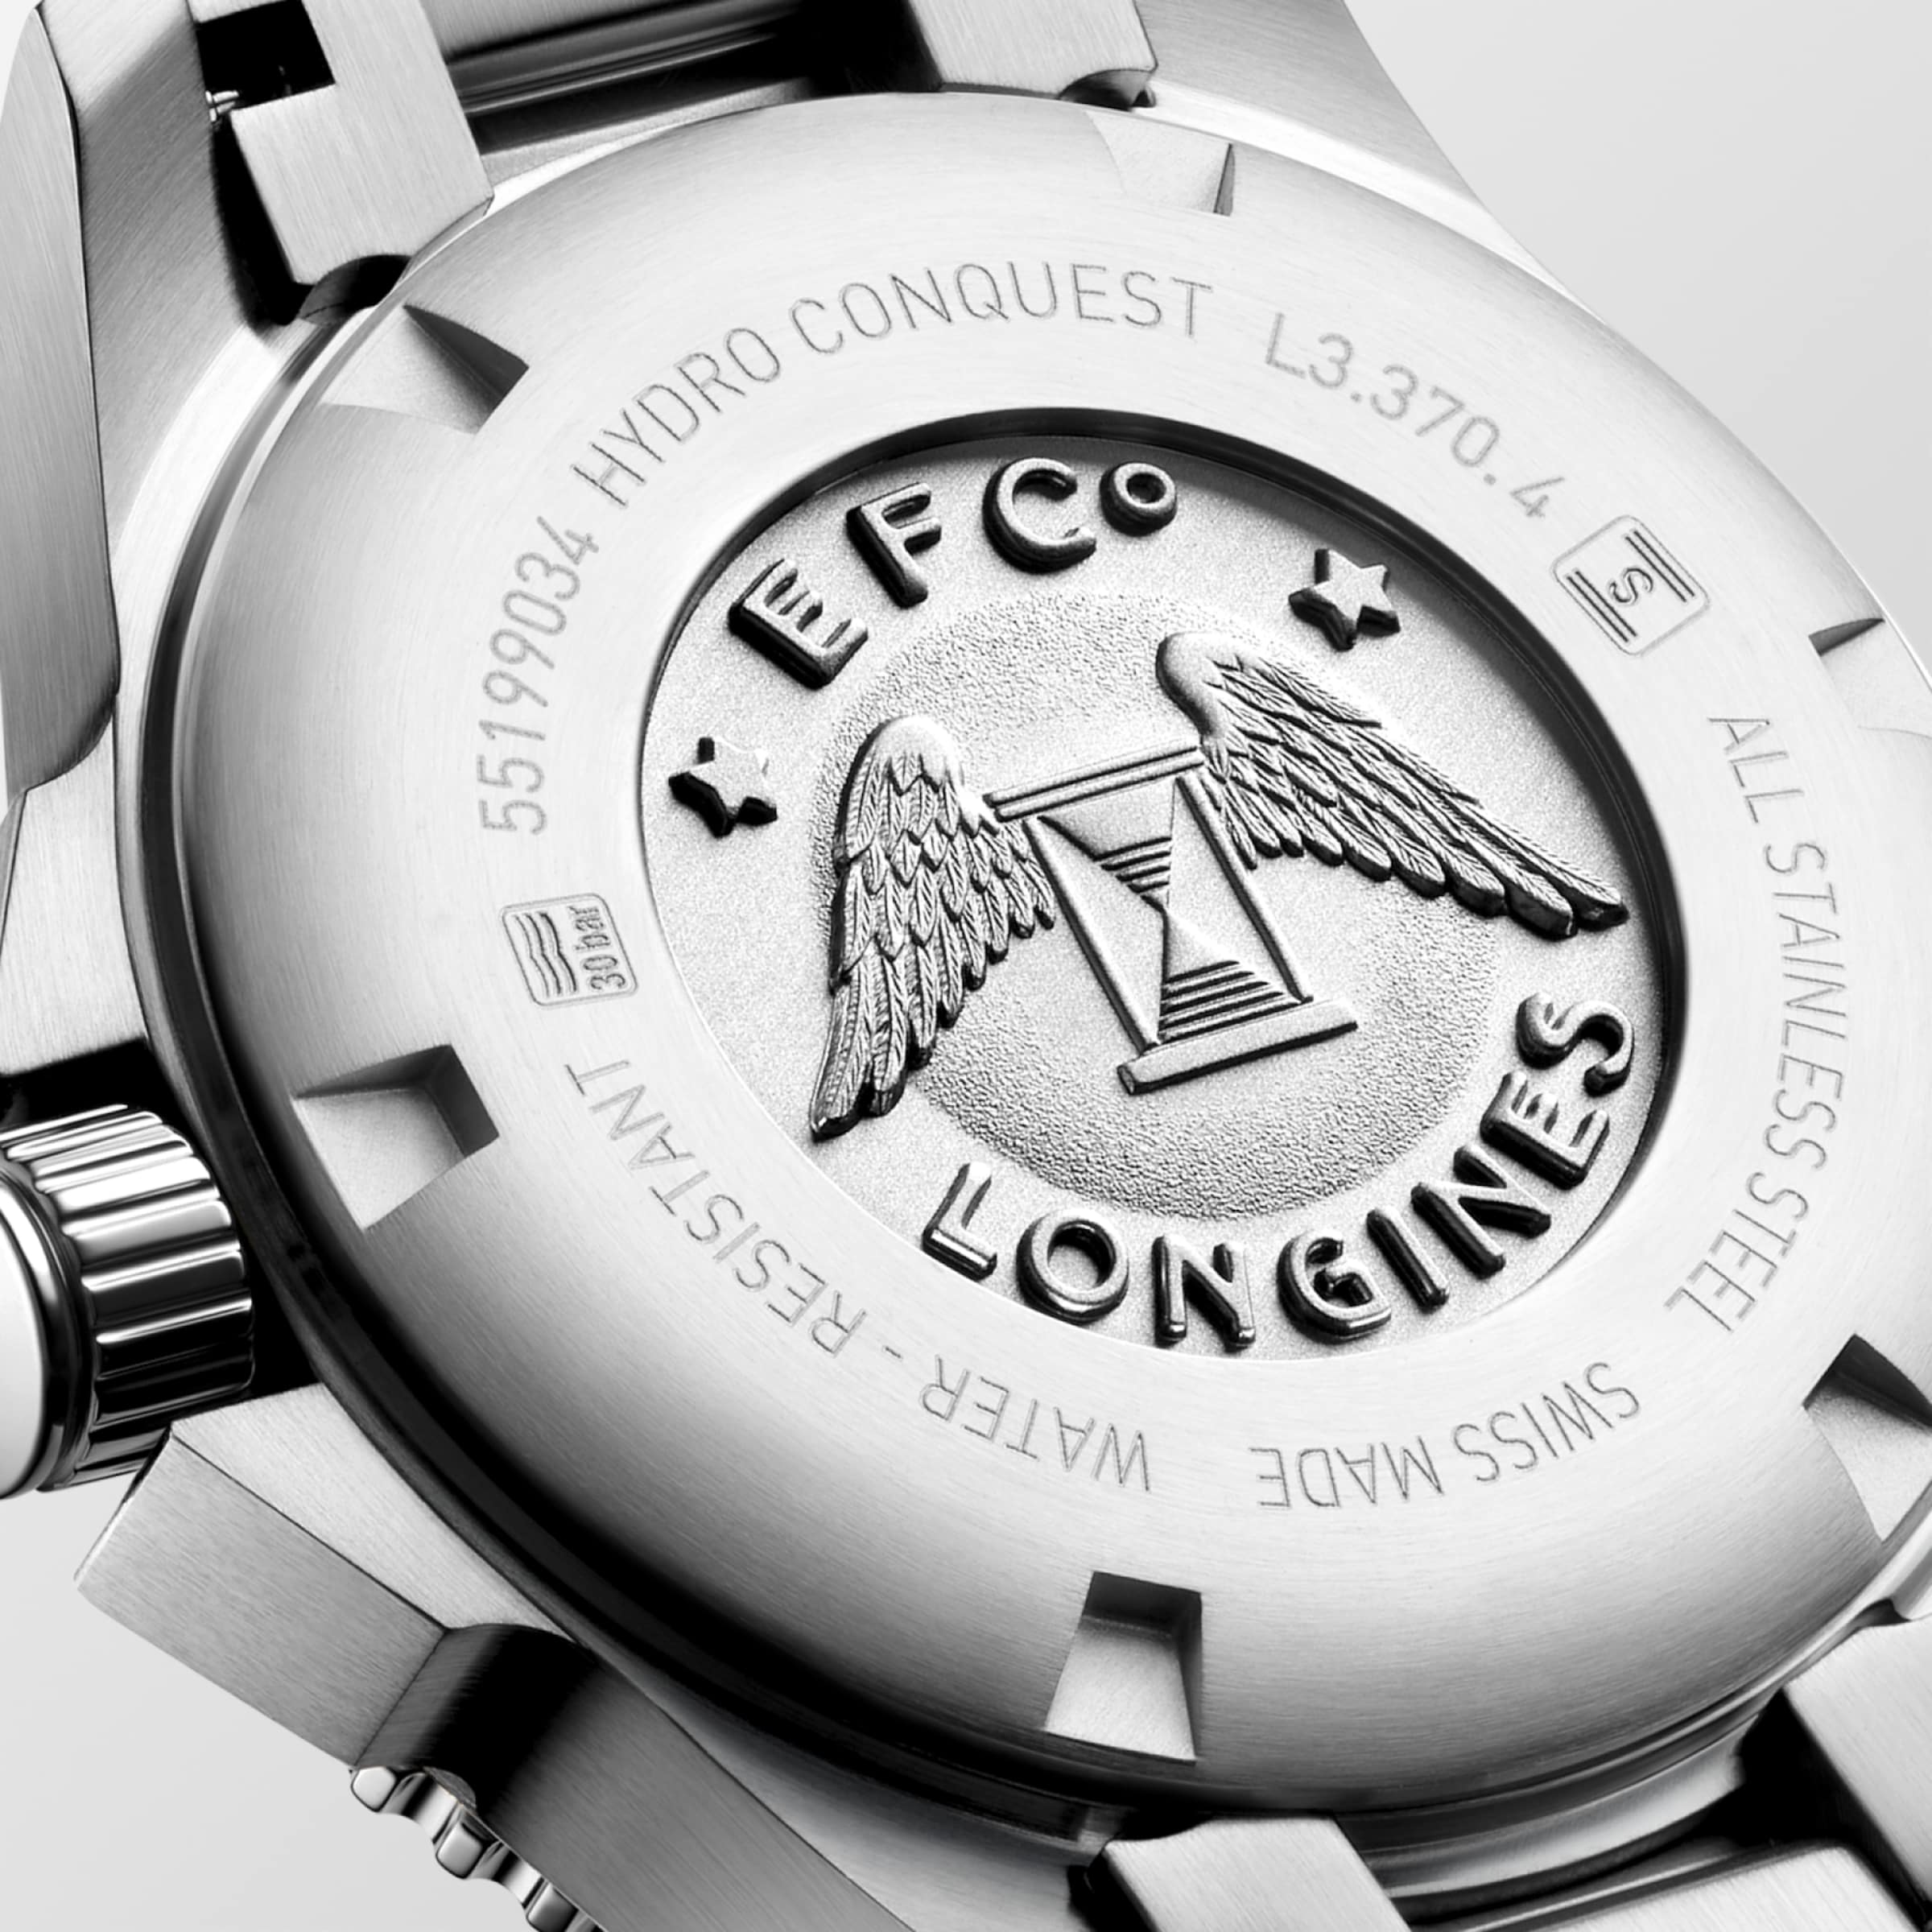 Longines HYDROCONQUEST Quartz Stainless steel and ceramic bezel Watch - L3.370.4.87.6